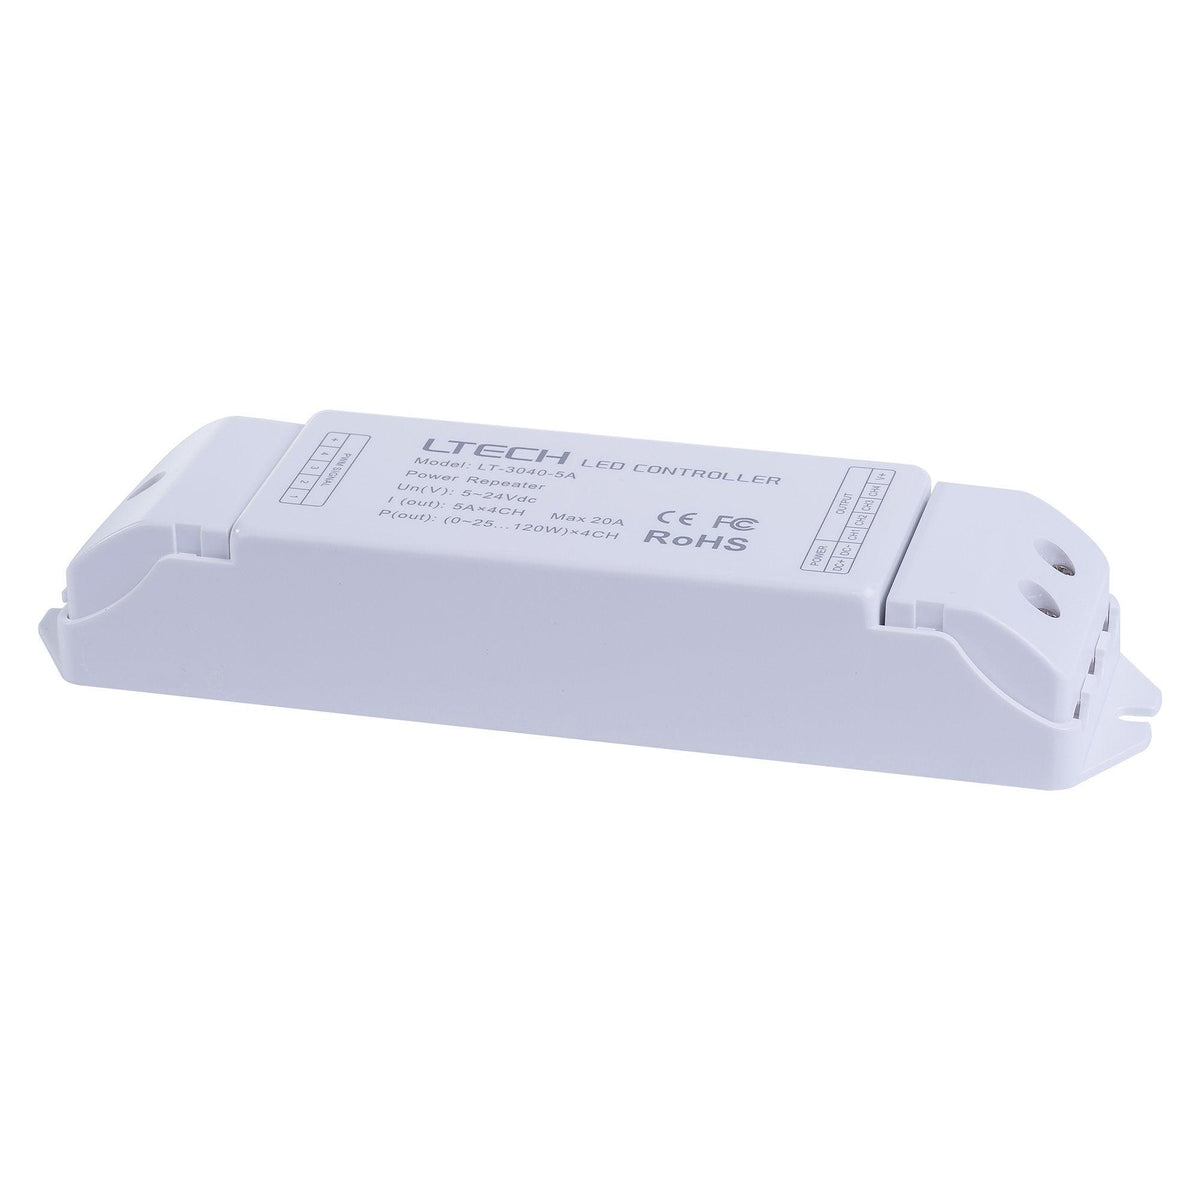 Havit Lighting LED Strip Controllers White 4 Channel LED Strip Repeater by Havit Lighting - HV9104-LT-3040-5A Lights-For-You HV9104-LT-3040-5A